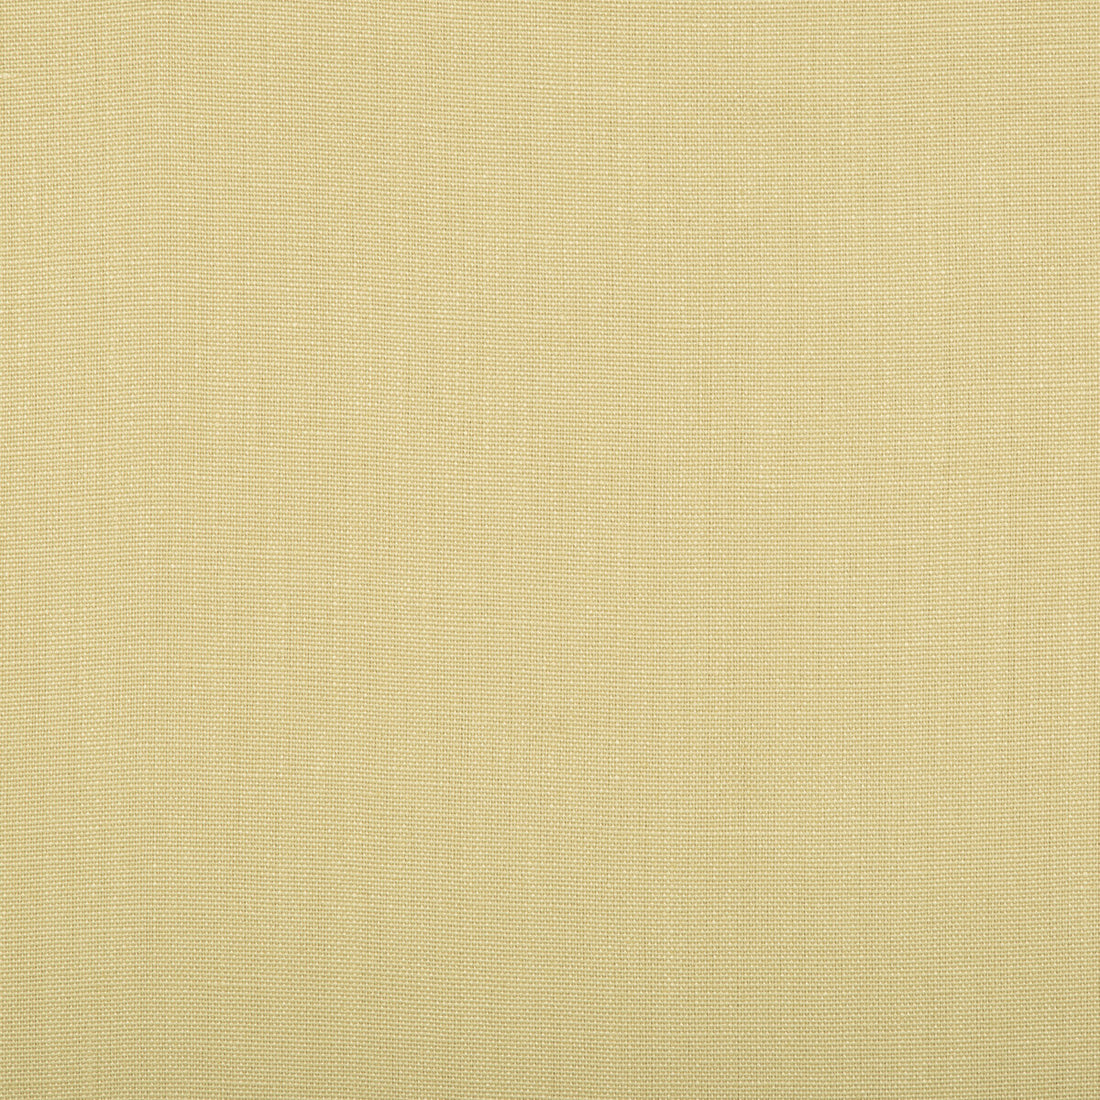 Hampton Linen fabric in oatmeal color - pattern 2012171.416.0 - by Lee Jofa